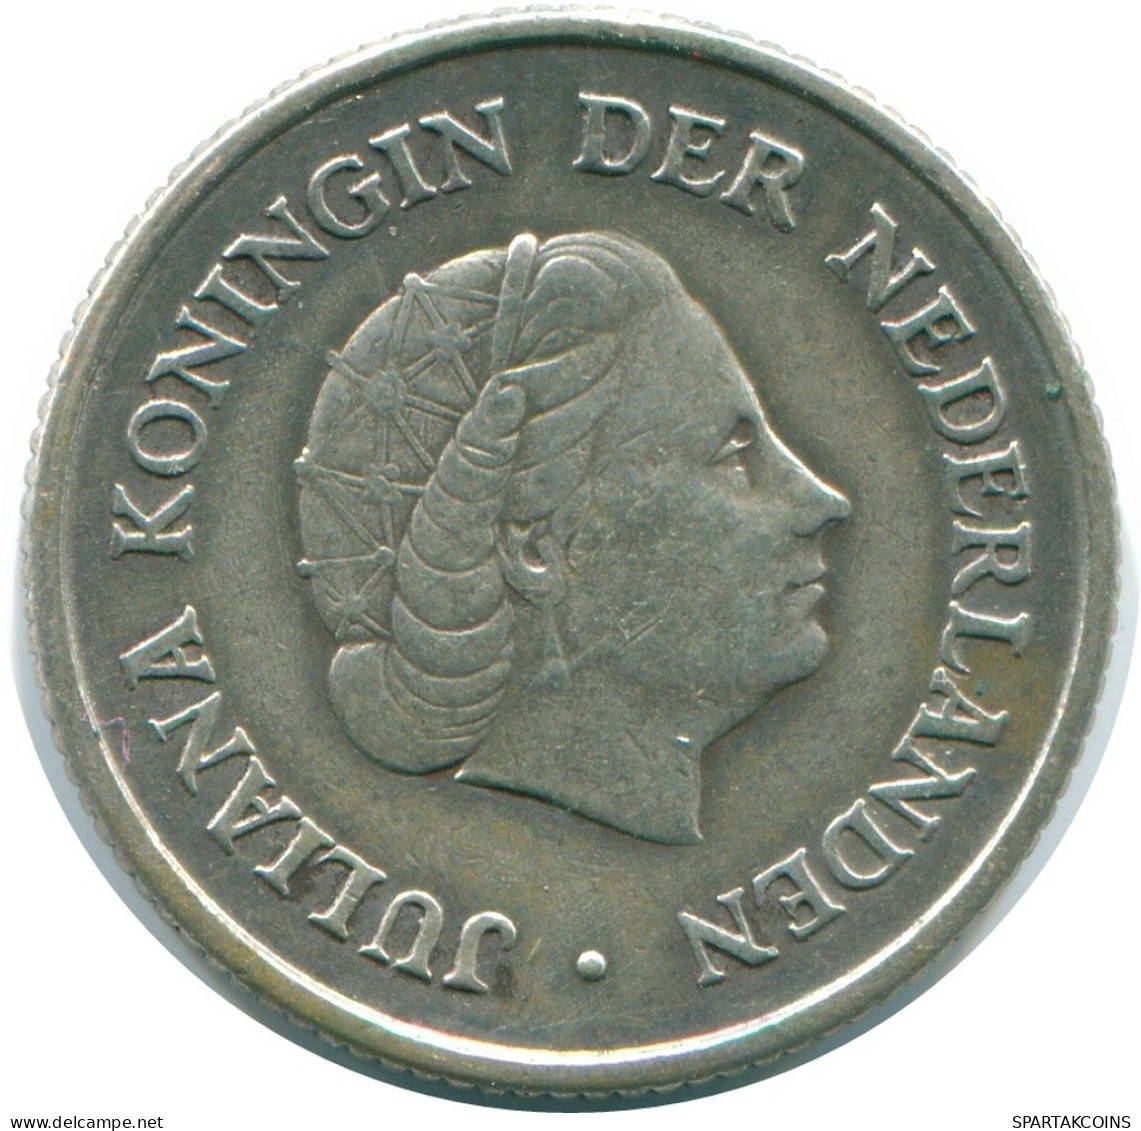 1/4 GULDEN 1962 NETHERLANDS ANTILLES SILVER Colonial Coin #NL11167.4.U.A - Niederländische Antillen